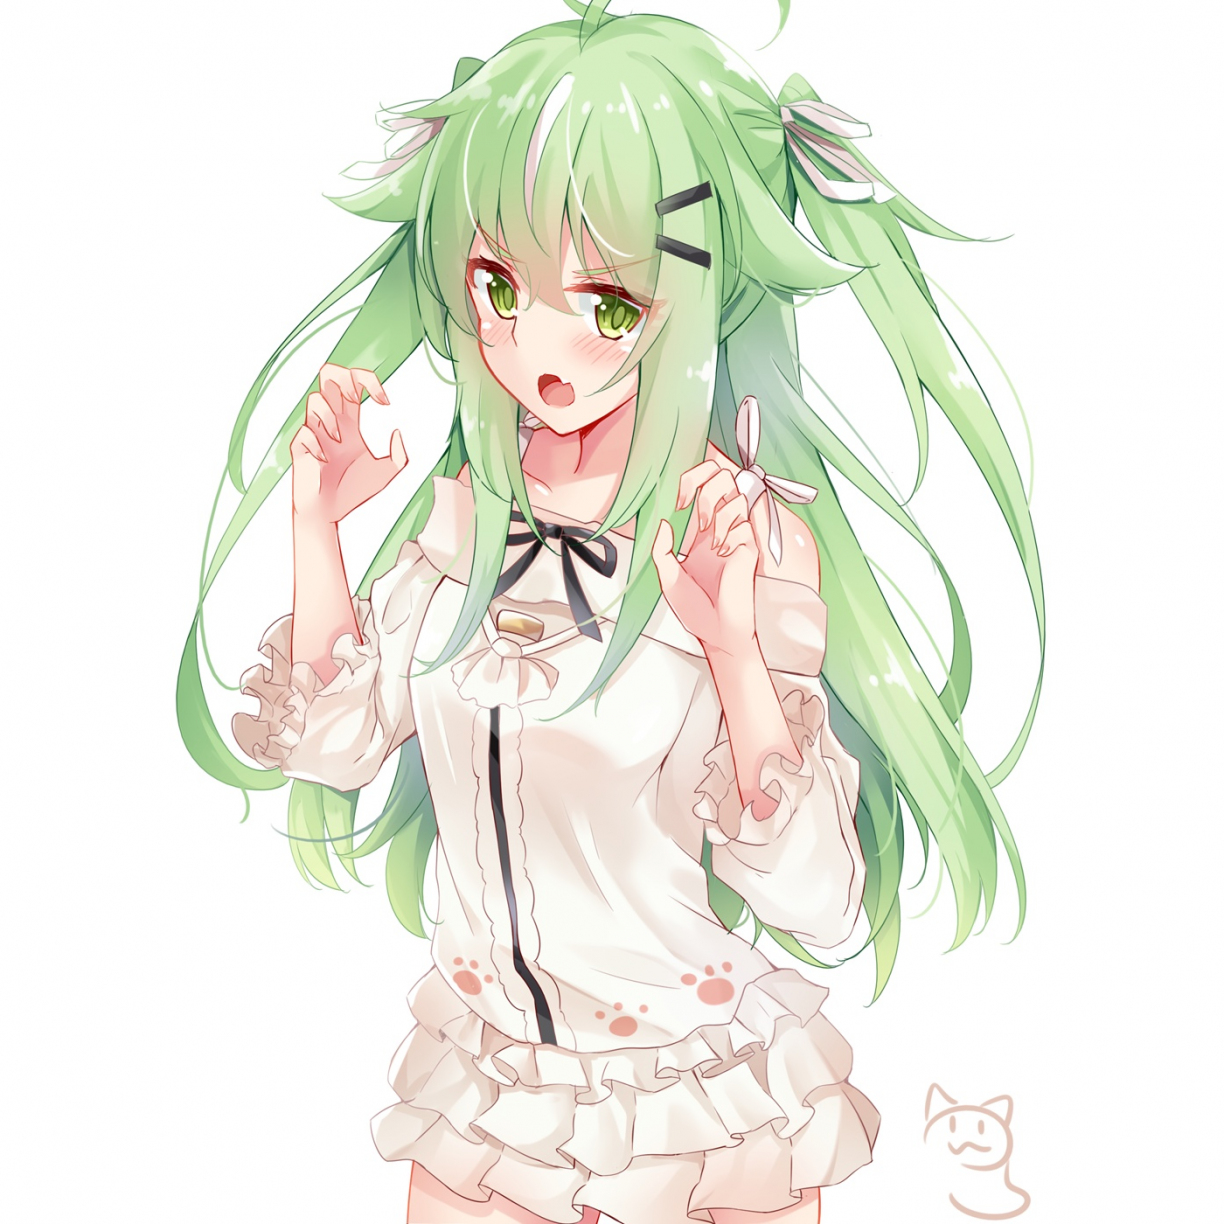 Desktop Wallpaper Cute Green Hair Anime Girl Original Minimal Hd Image Picture Background